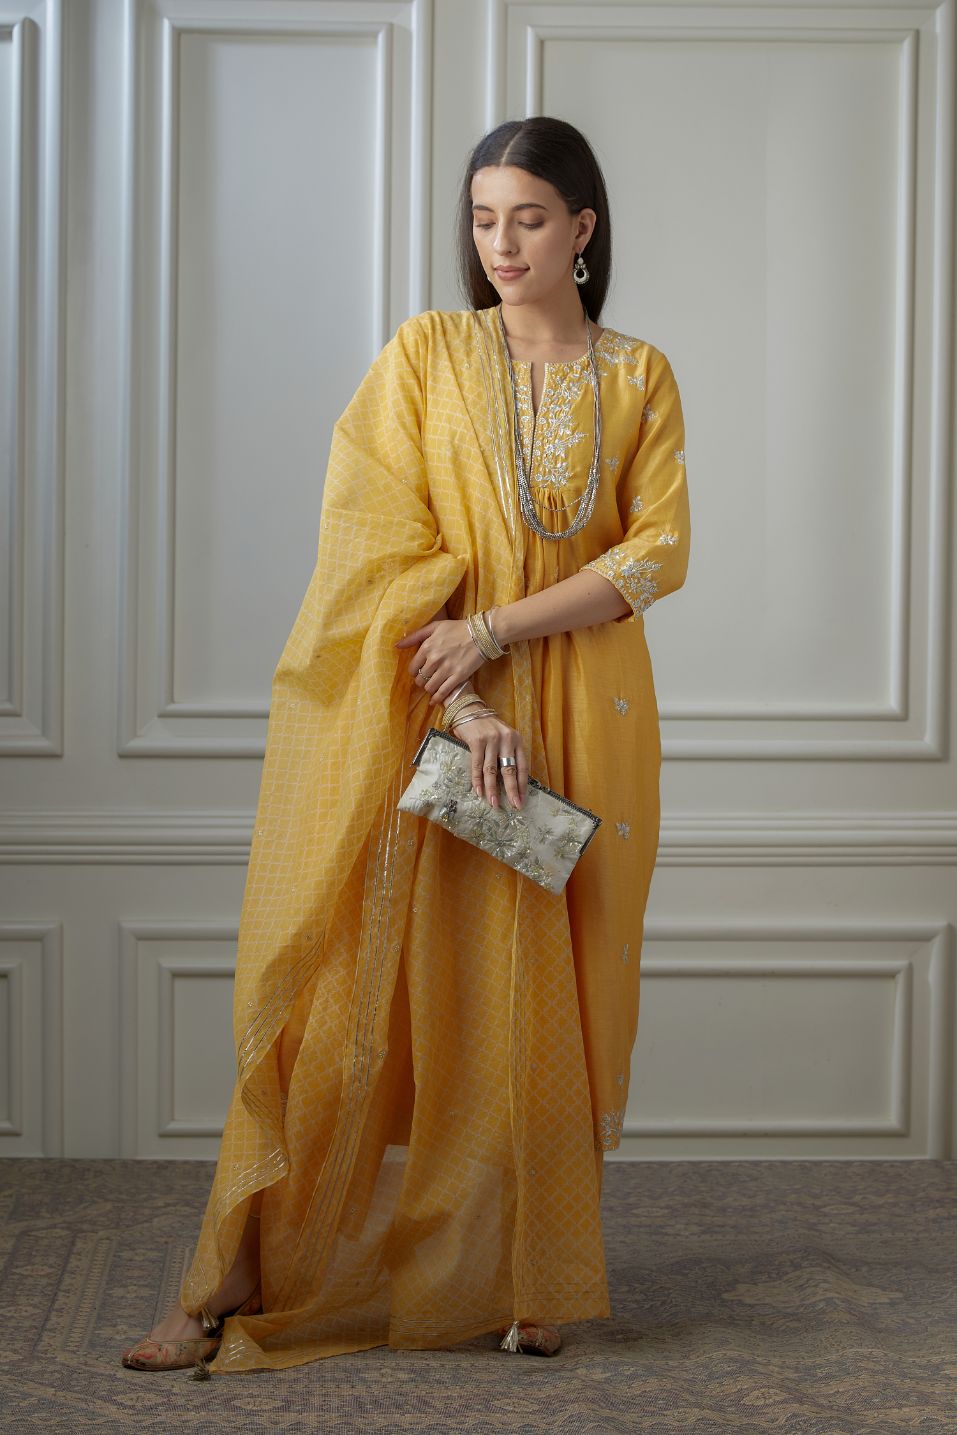 Golden yellow silver zari embroidered kurta dress set with fine gathers at waistline